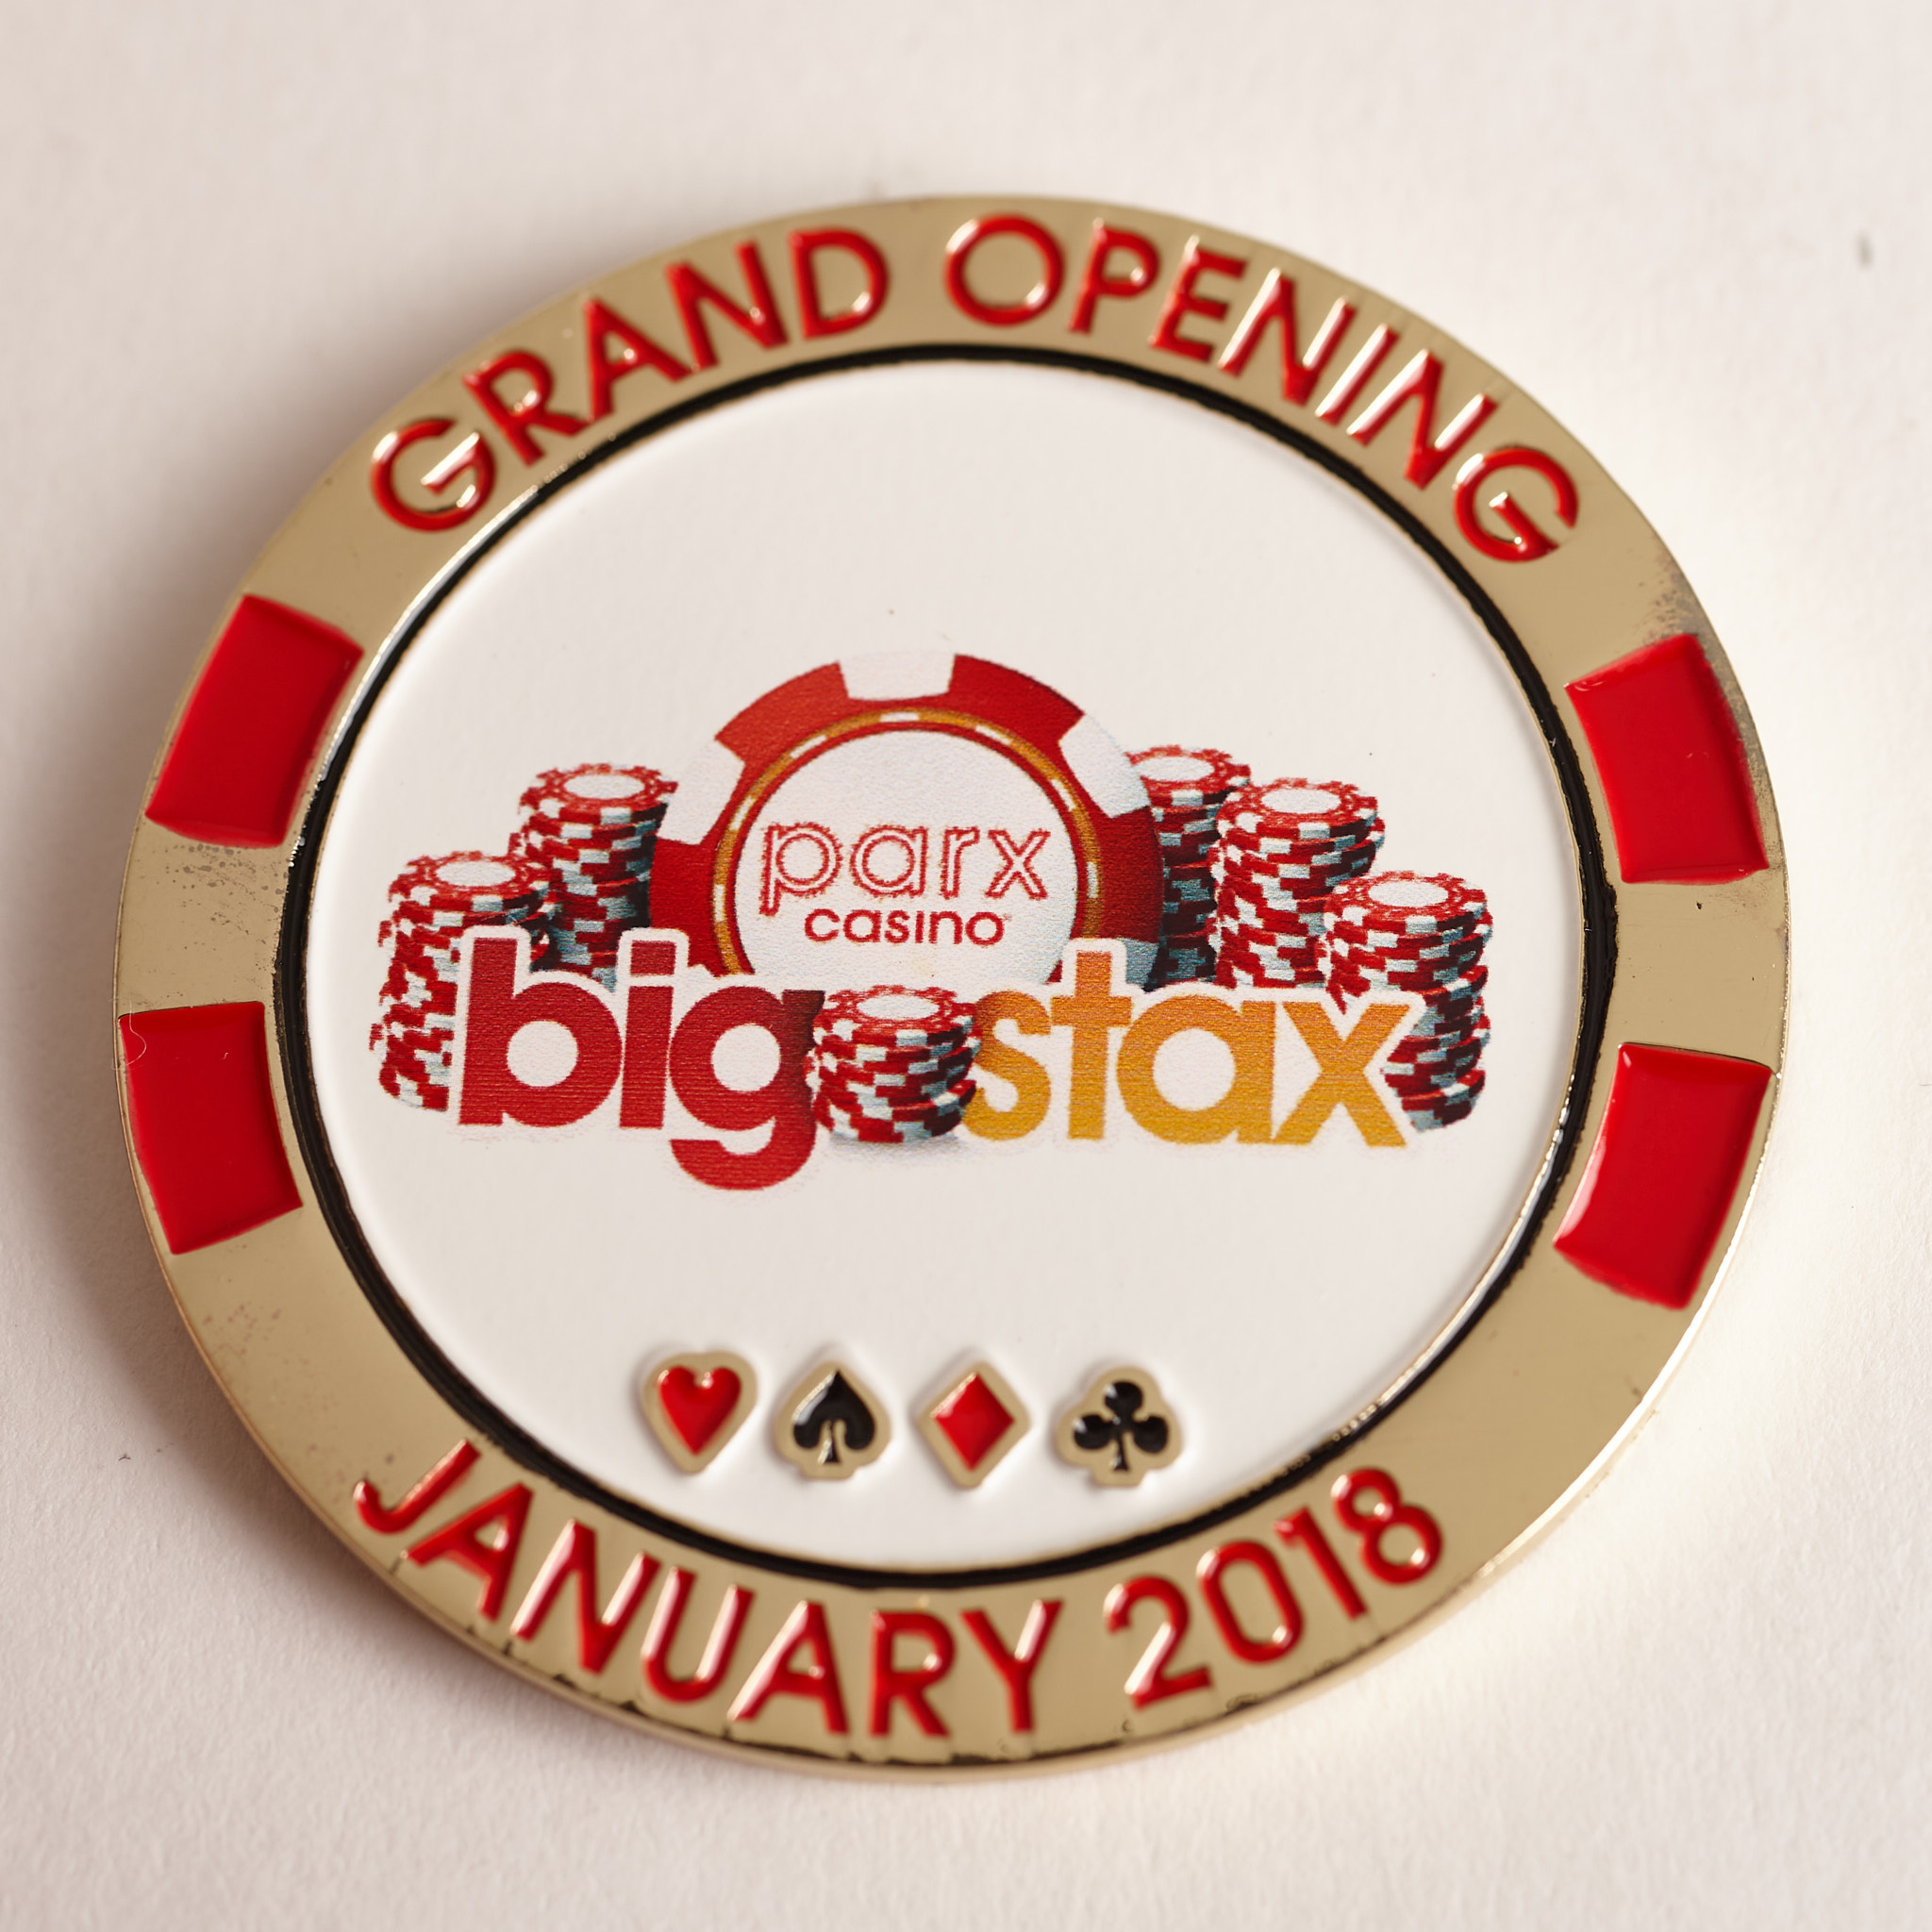 PARX CASINO, GRAND OPENING JANUARY 2018, BIG STAX, Poker Card Guard